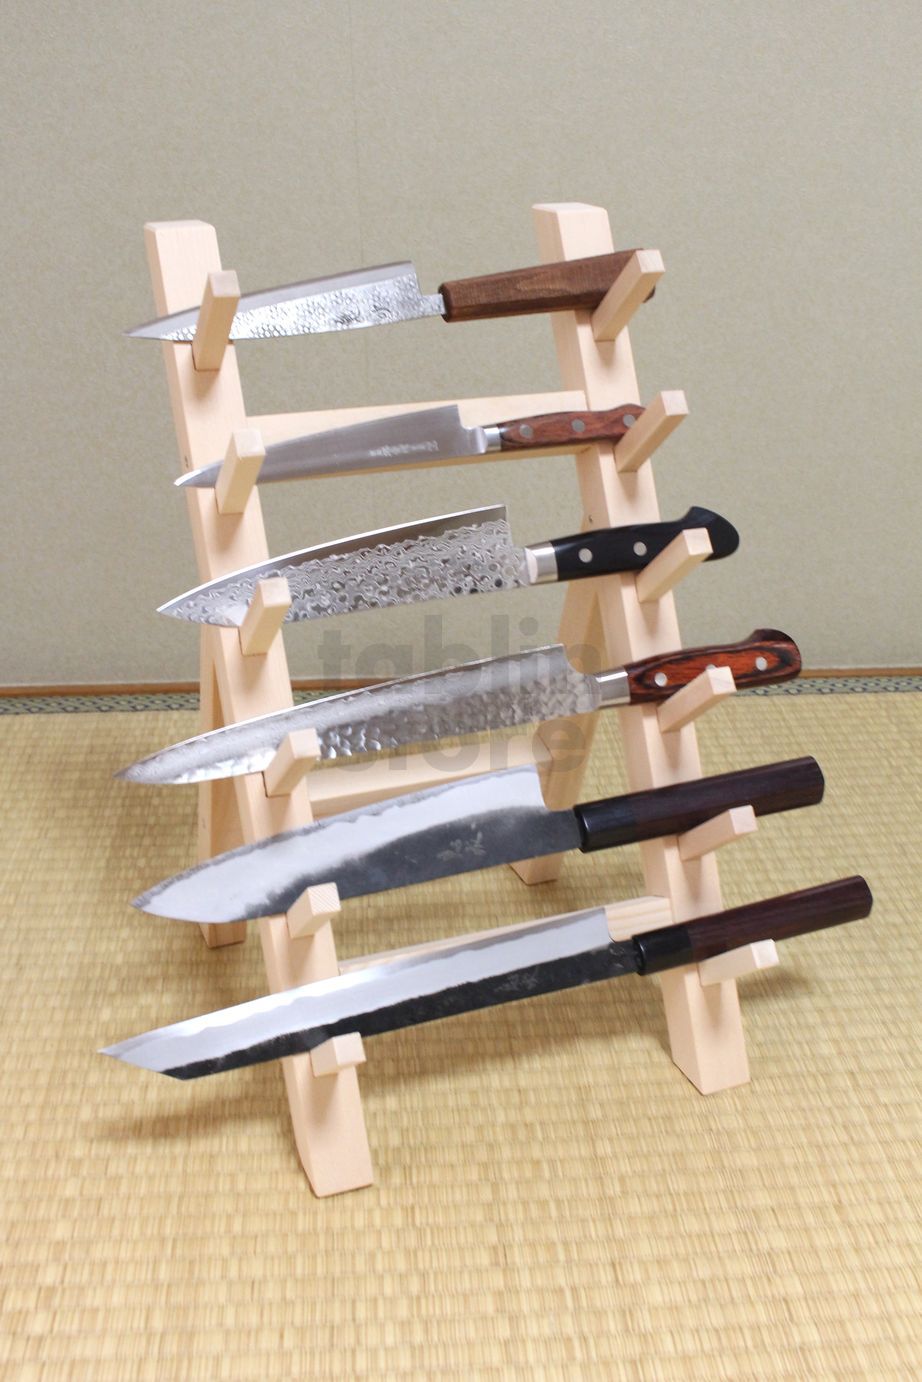 Stand knife mod. Подставки для коллекционных ножей. Подставка для коллекции ножей. Набор деревянных ножей. Подставка для ножей деревянная.